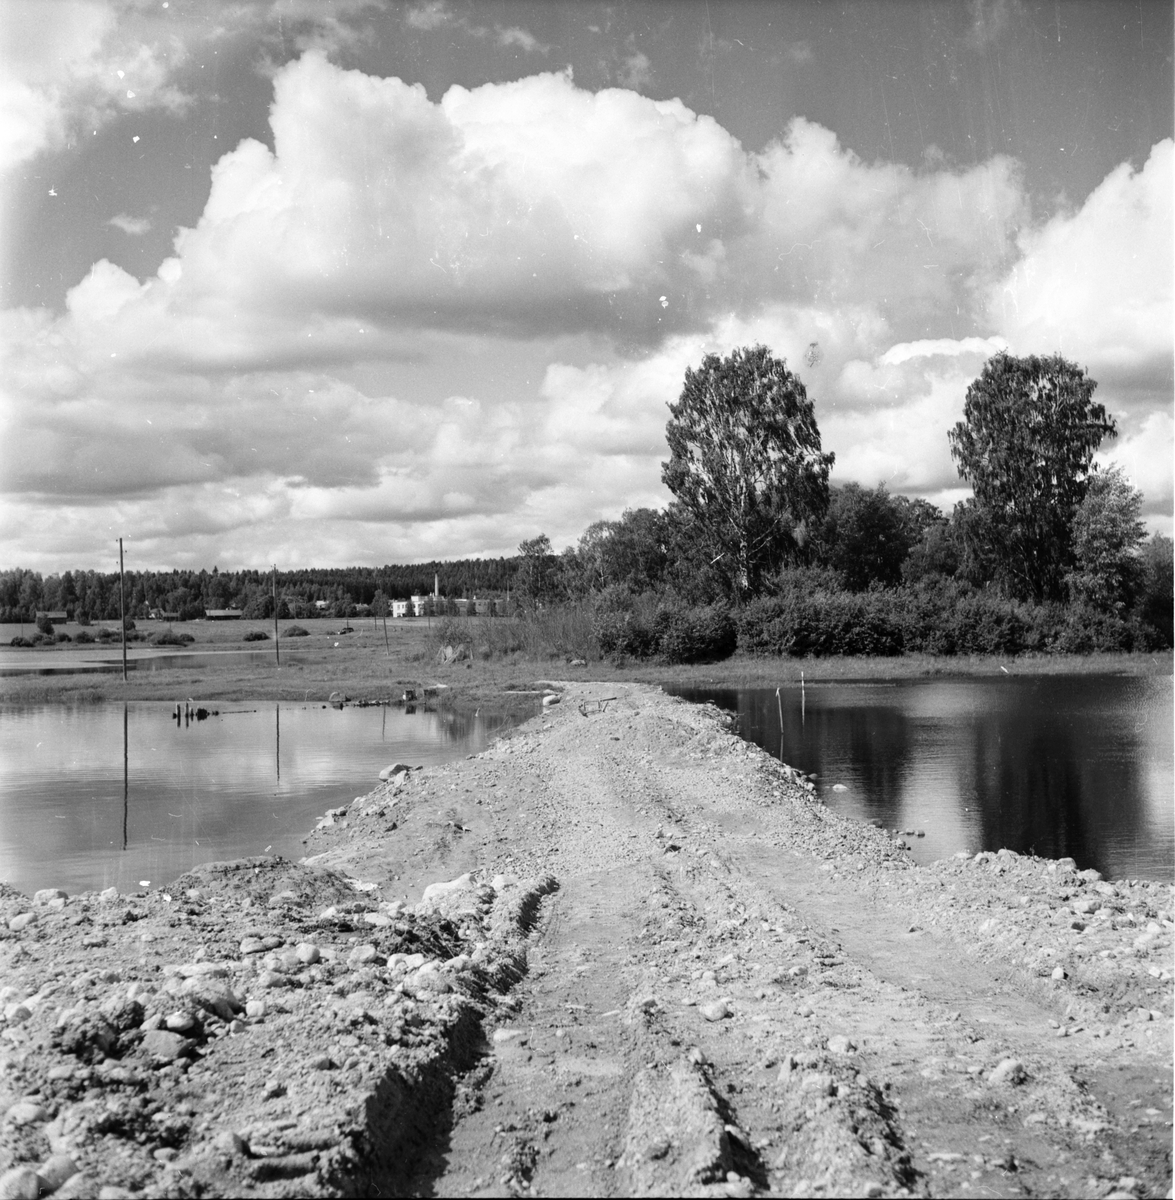 Vågen,
Dammen,
Stadsing St Sandström.
Bild 12 Juli 1957